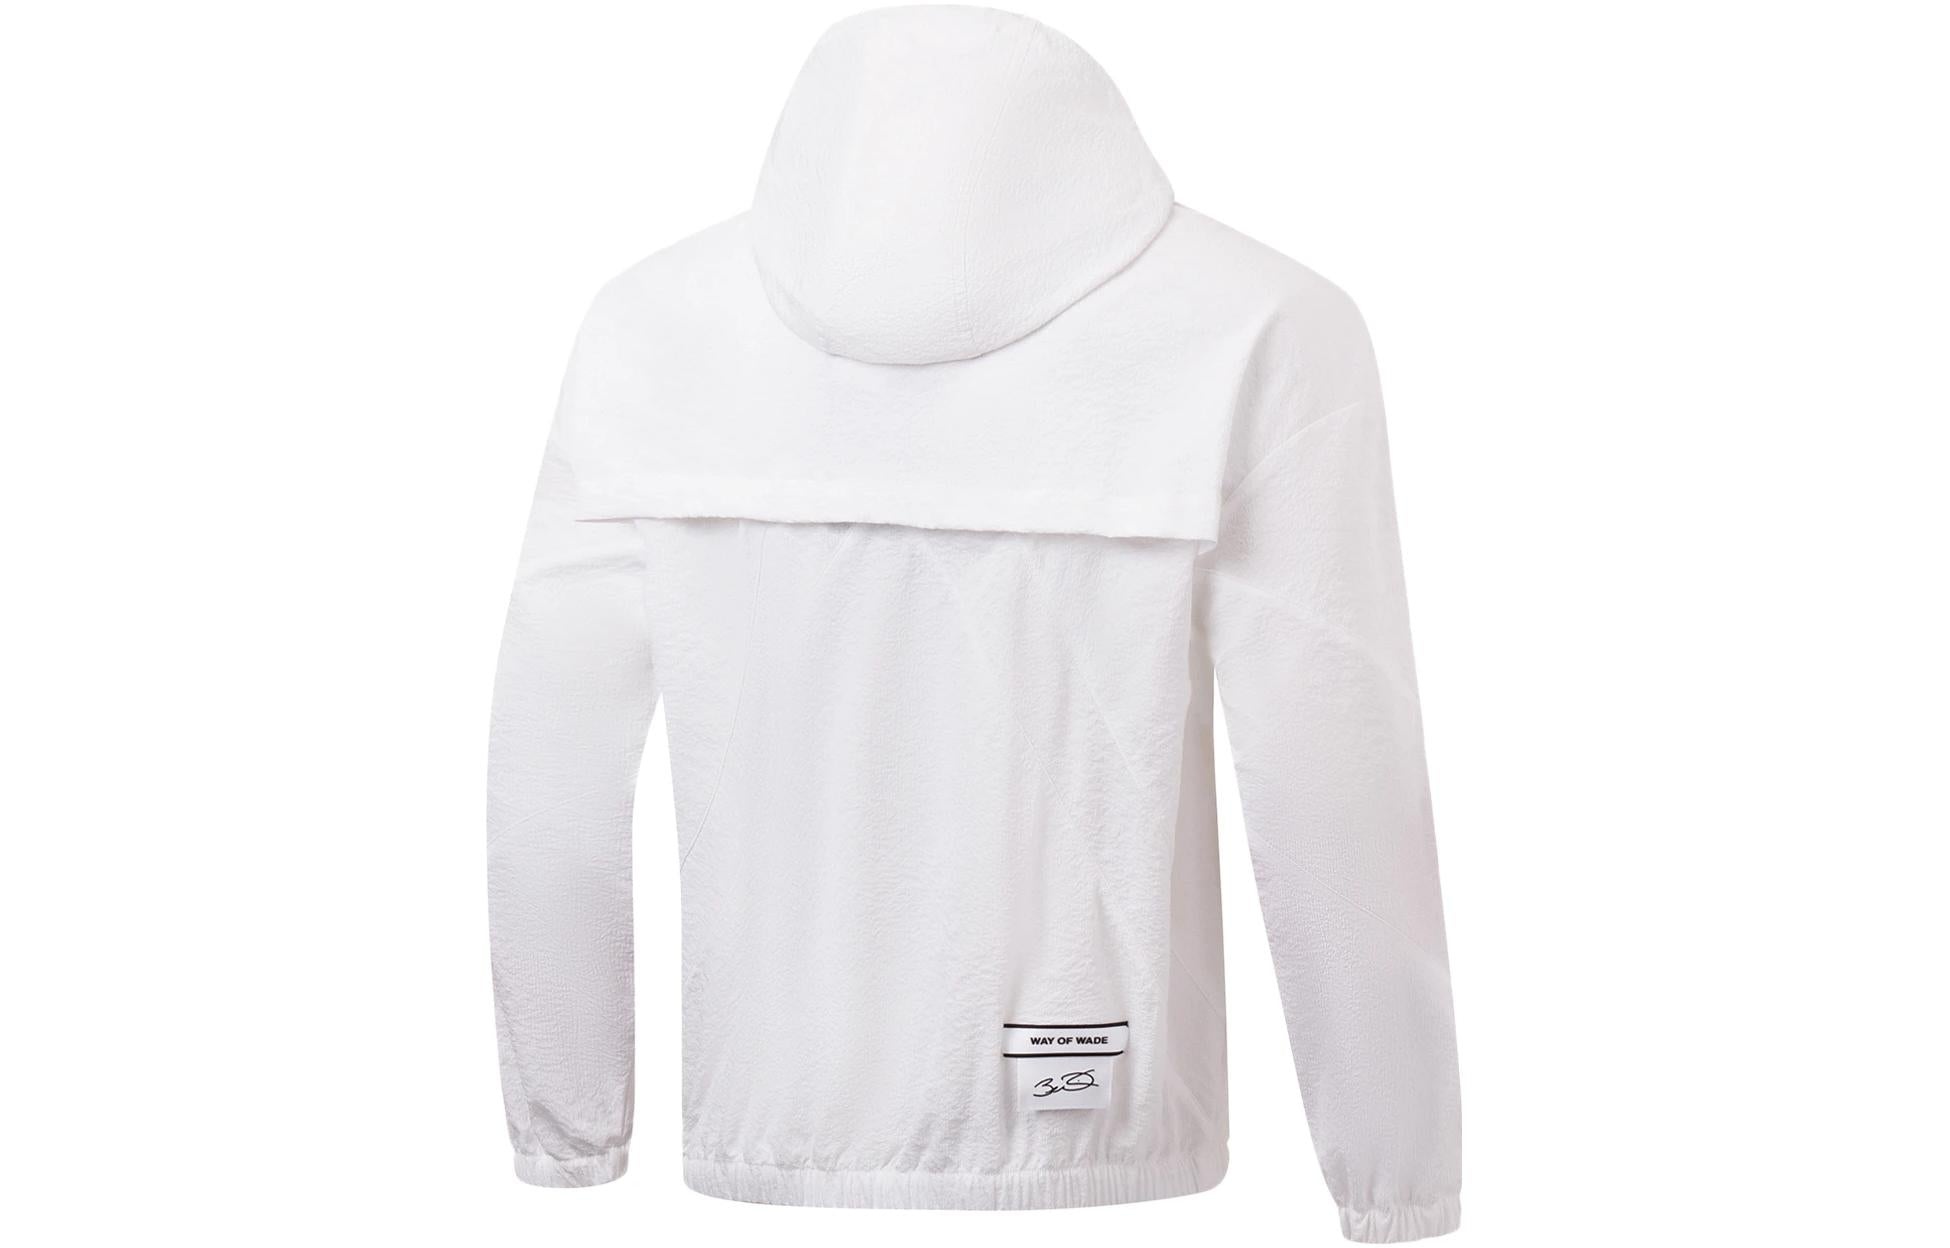 Li-Ning Way Of Wade Graphic Full Zip Hooded Jacket 'White' AFDT307-5 - 2